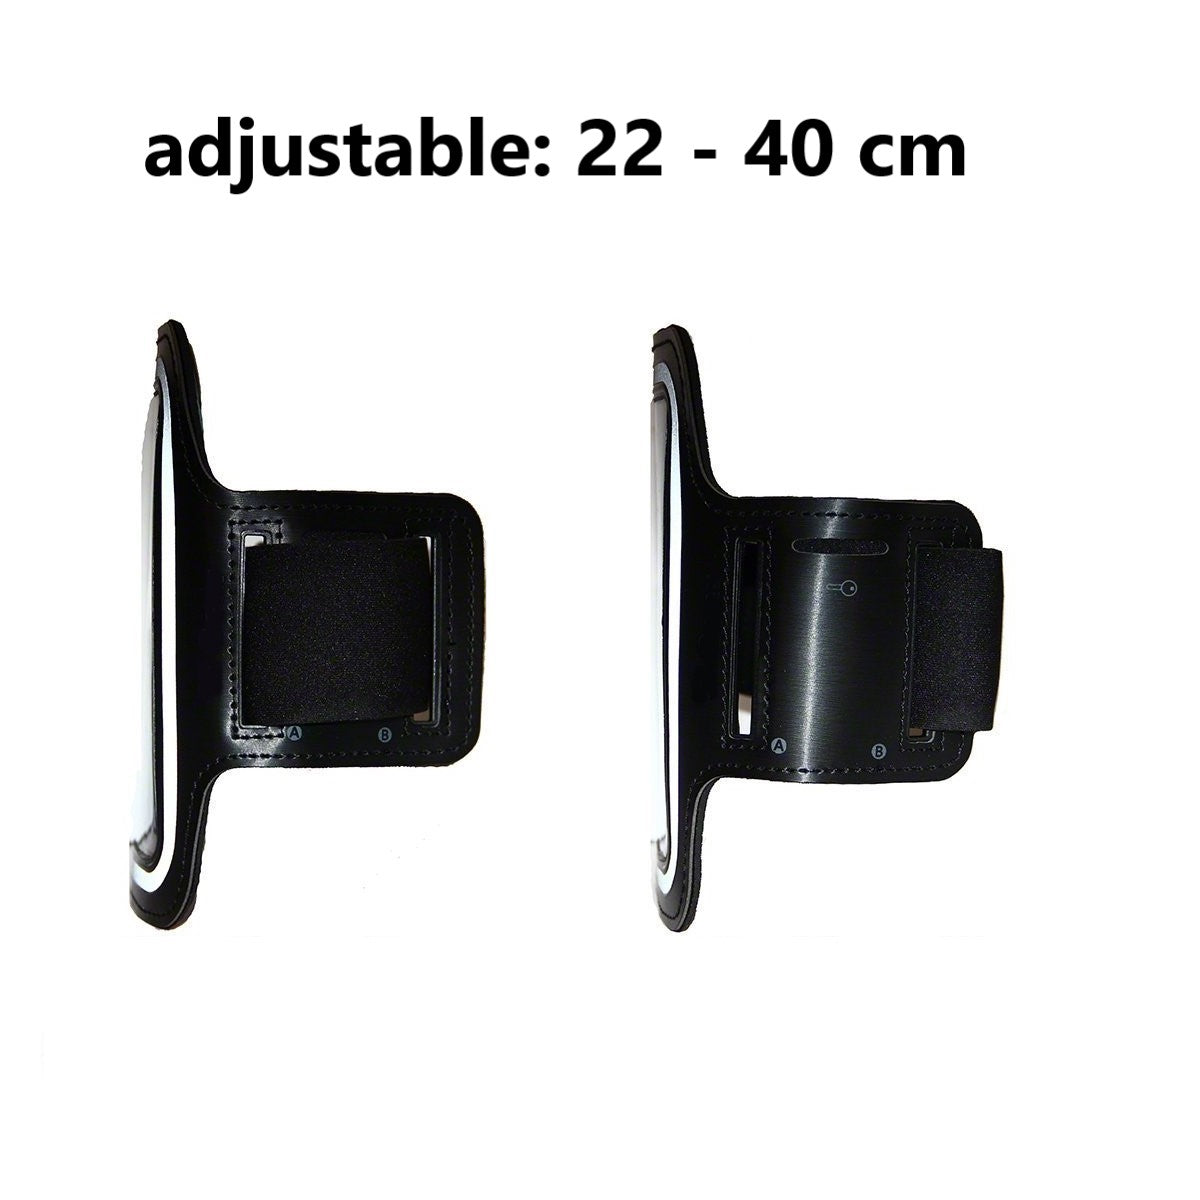 Armband für Xiaomi Mi A2 Lite Sportarmband Handy Tasche Fitness Jogging Handyhülle